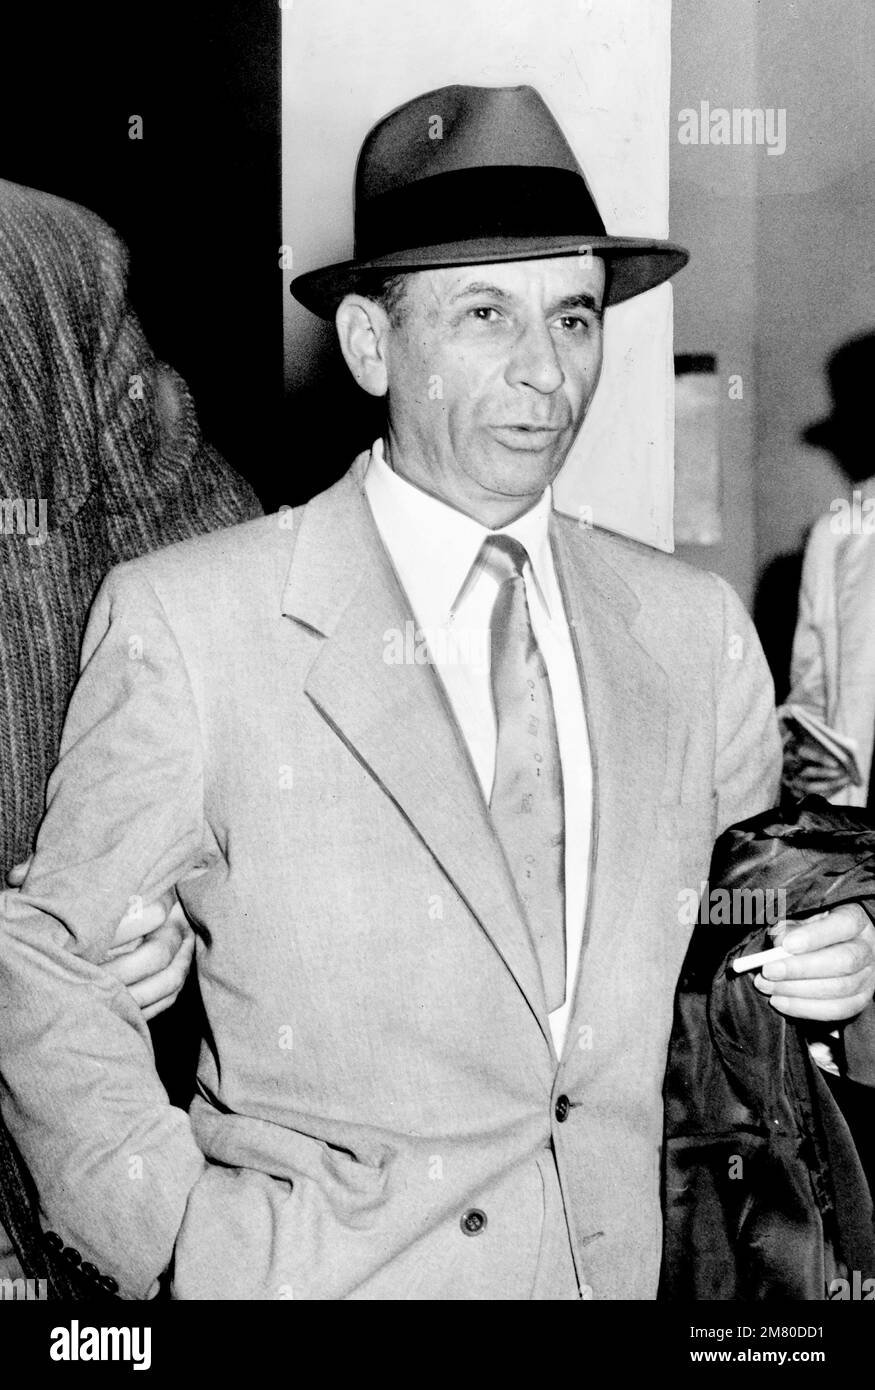 Meyer Lansky. Photograph of the American organized crime figure, nicknamed the 'Mobs Accountaint', Meyer Lansky (b. Maier Suchowljansky, 1902-1983) by Orlando Fernandez, 1958. Stock Photo